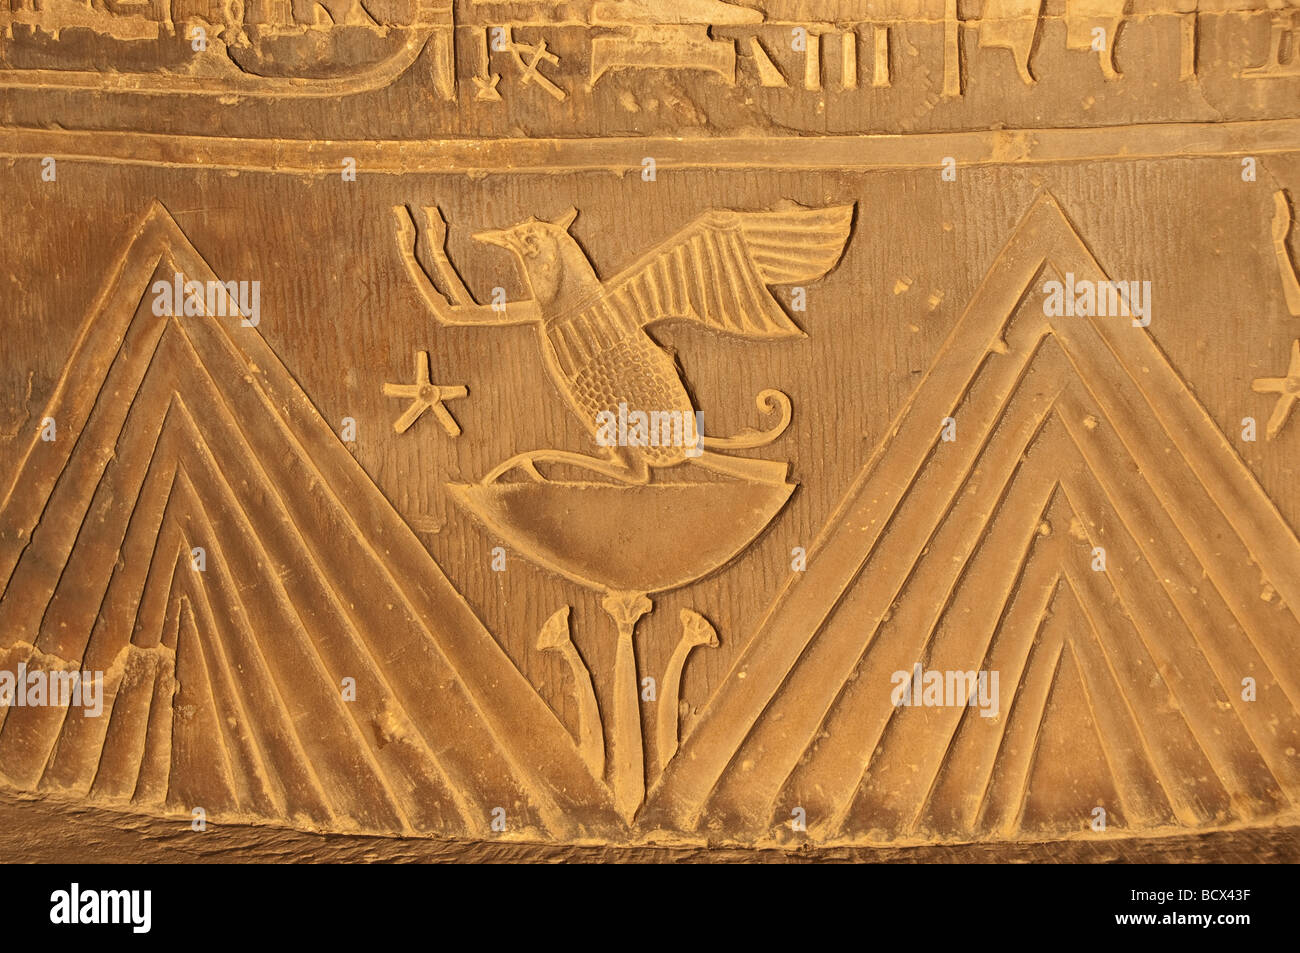 Egypt Kom Ombo temple wall carving reliefs lotus stars animal hieroglphs hieroglyphics Stock Photo